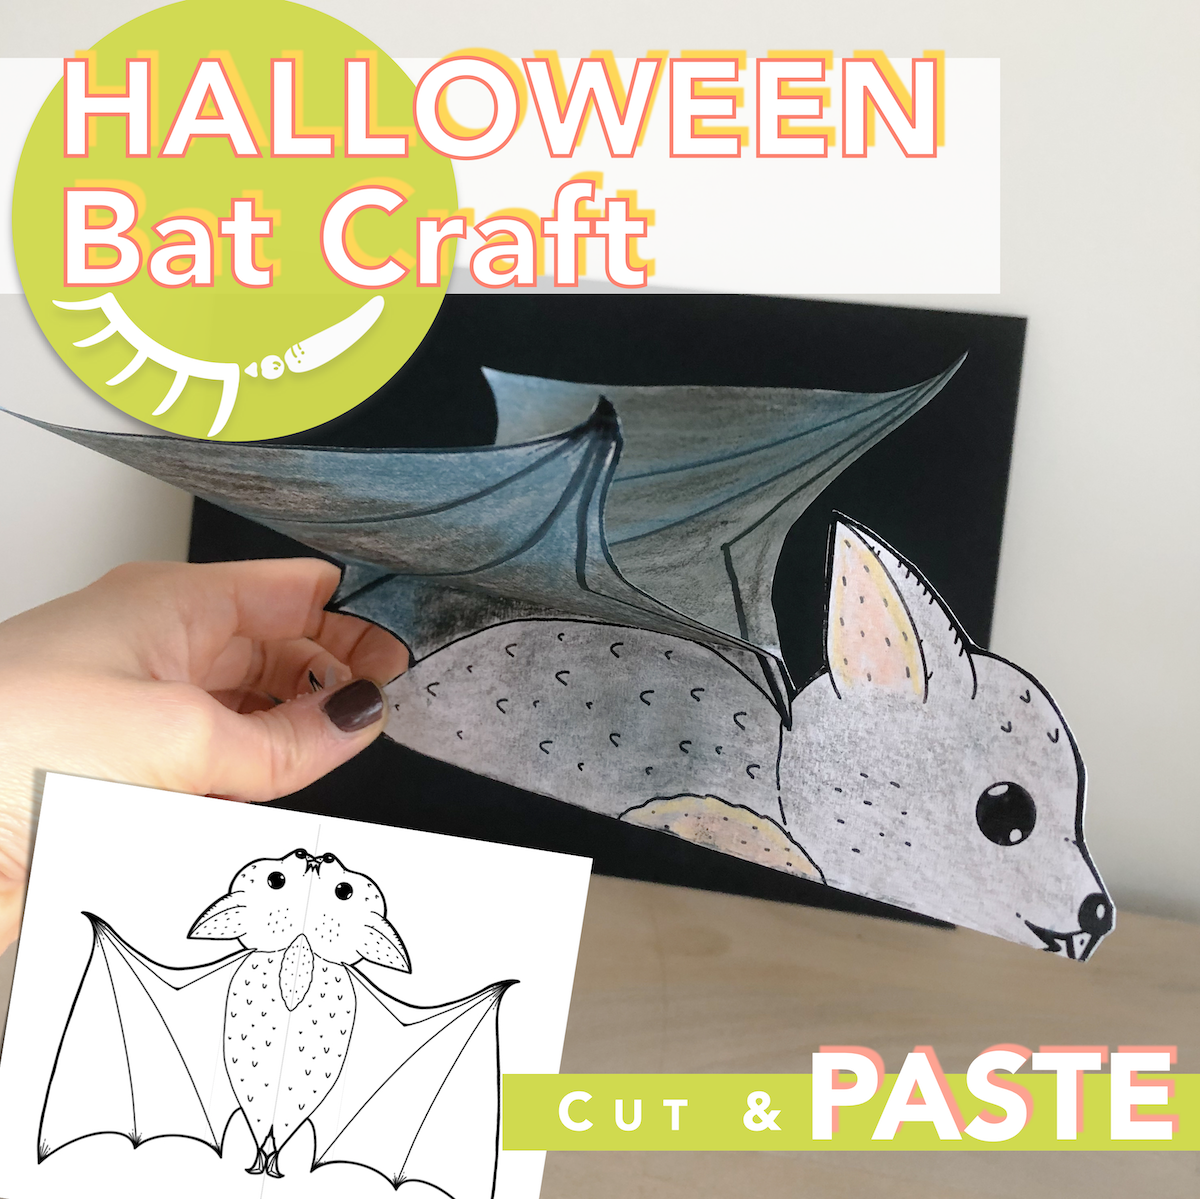 Printable bat craft that becomes 3D.